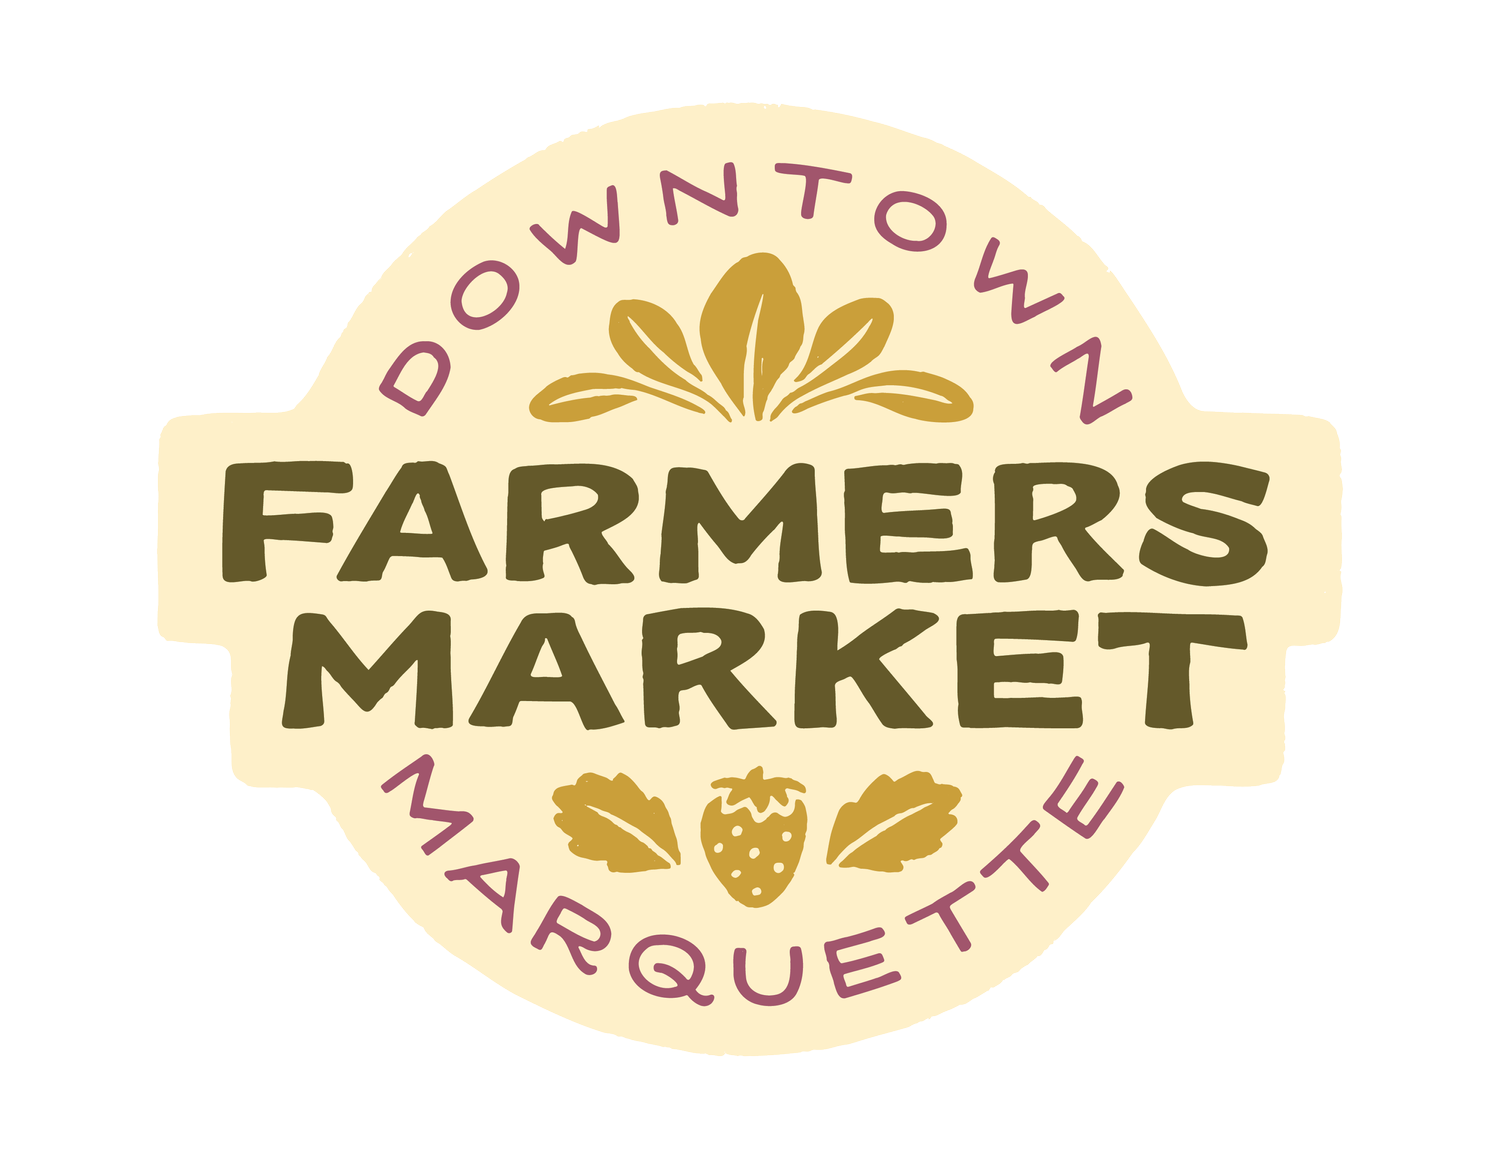 Downtown Marquette Farmers Market